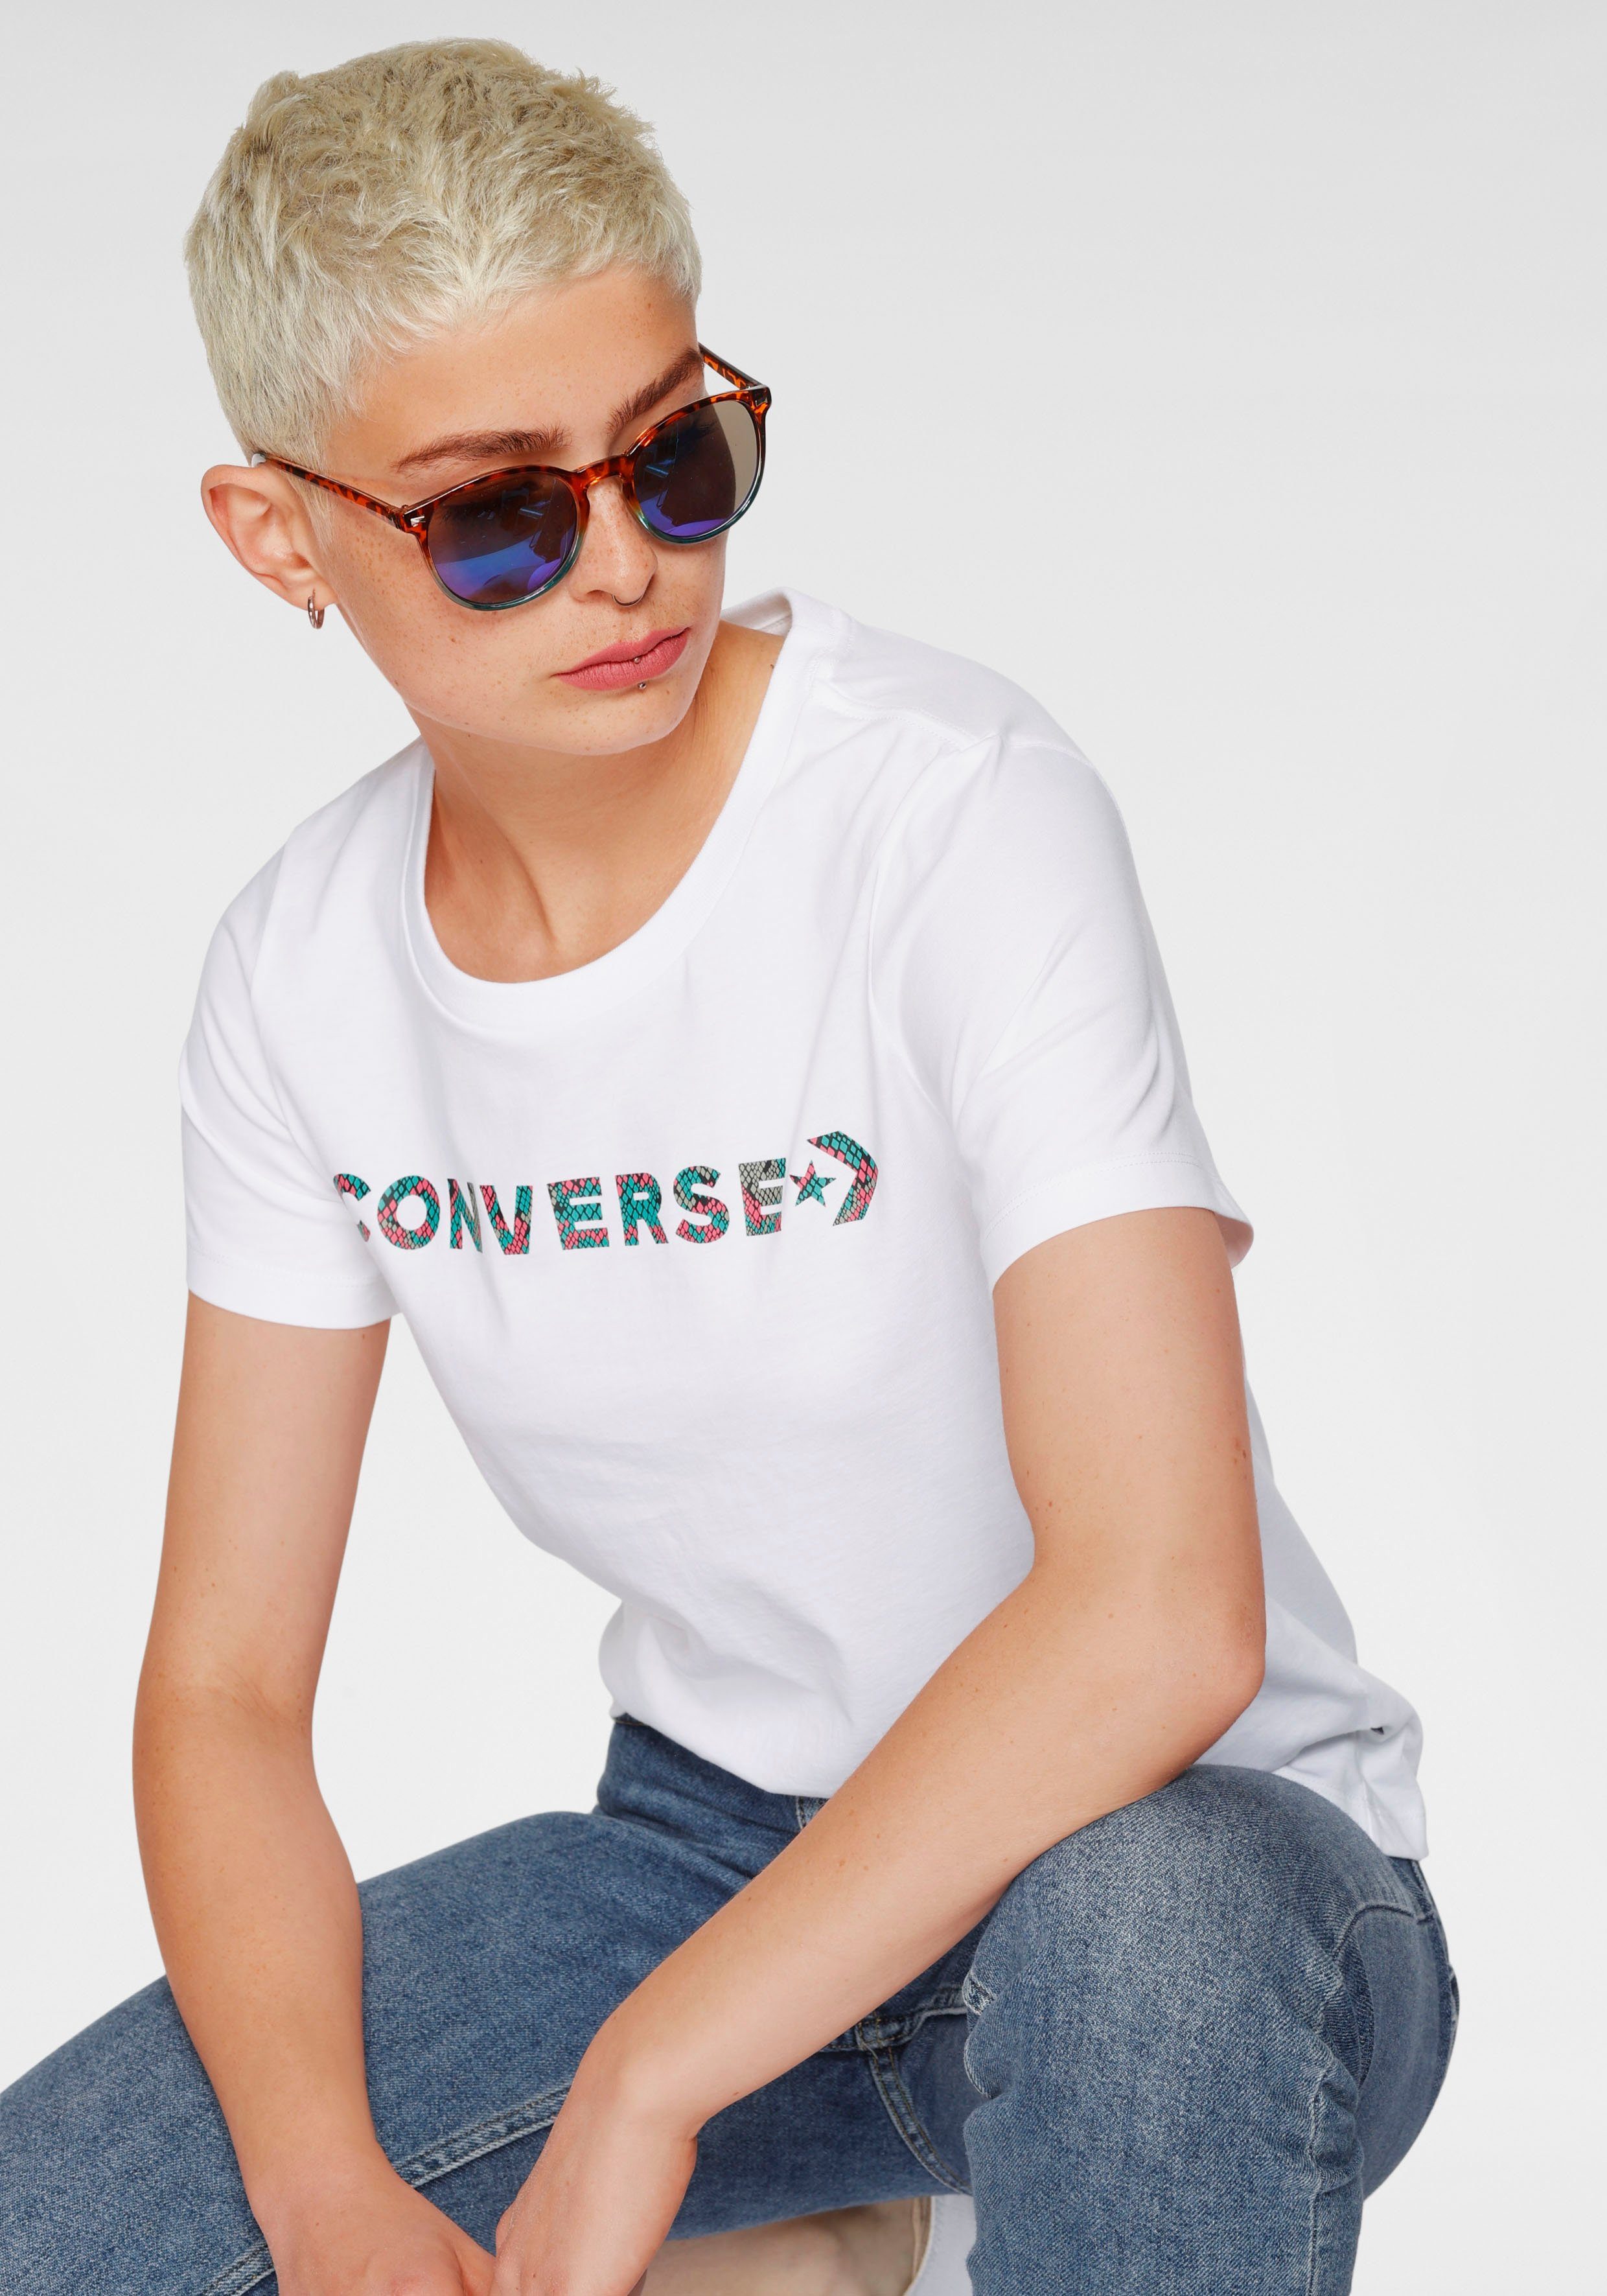 converse shirt logo